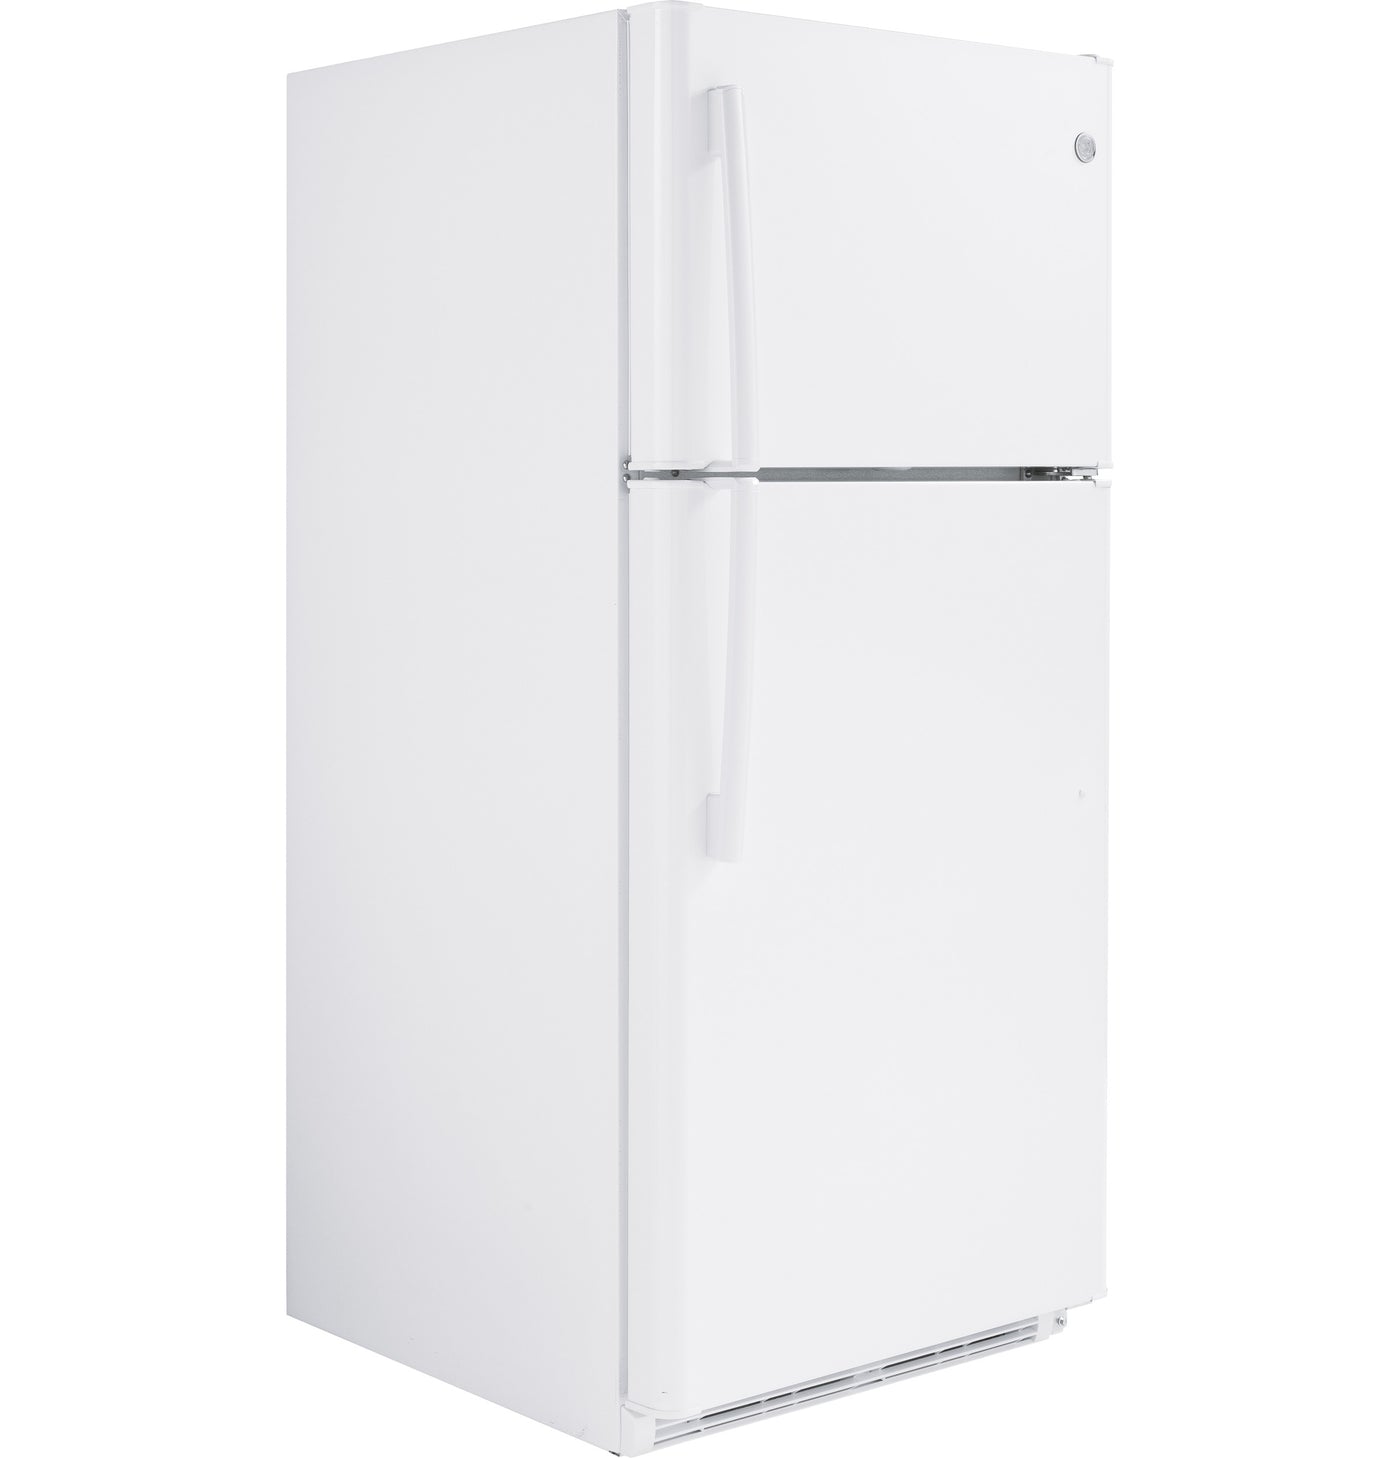 GE White Top-Freezer Refrigerator (18 Cu. Ft.) - GTS18FTLKWW